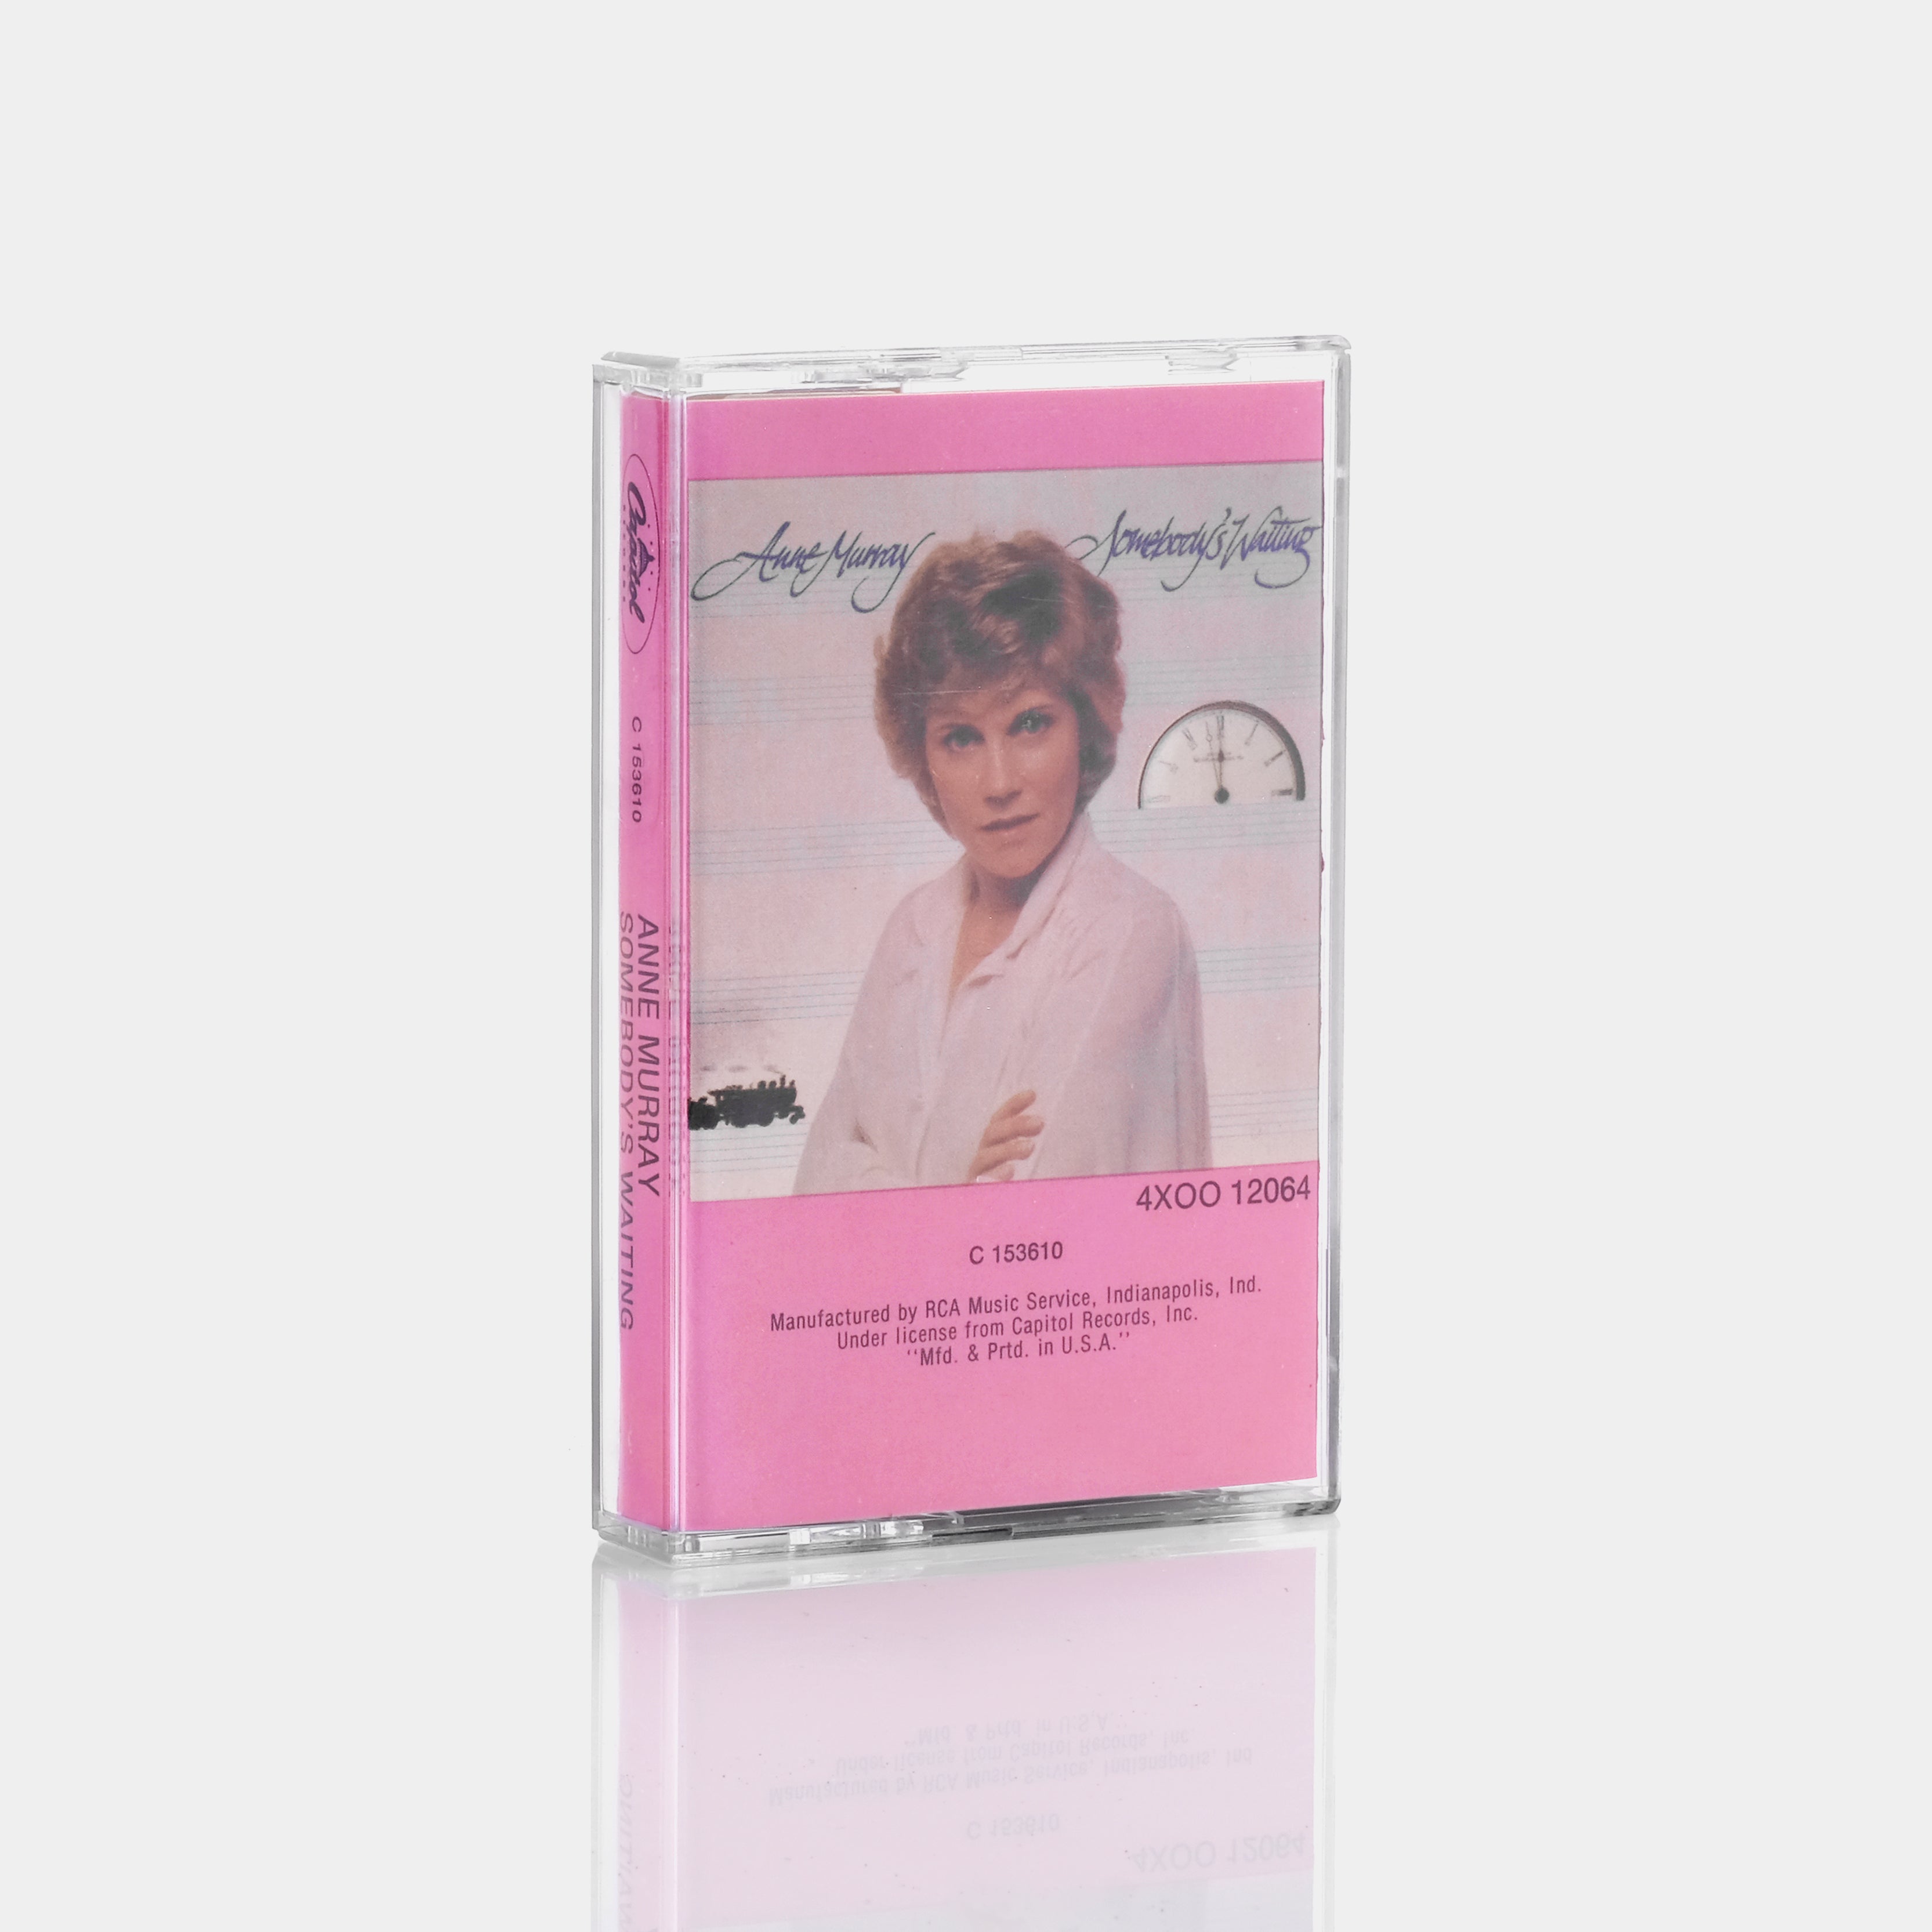 Anne Murray - Somebody's Waiting Cassette Tape